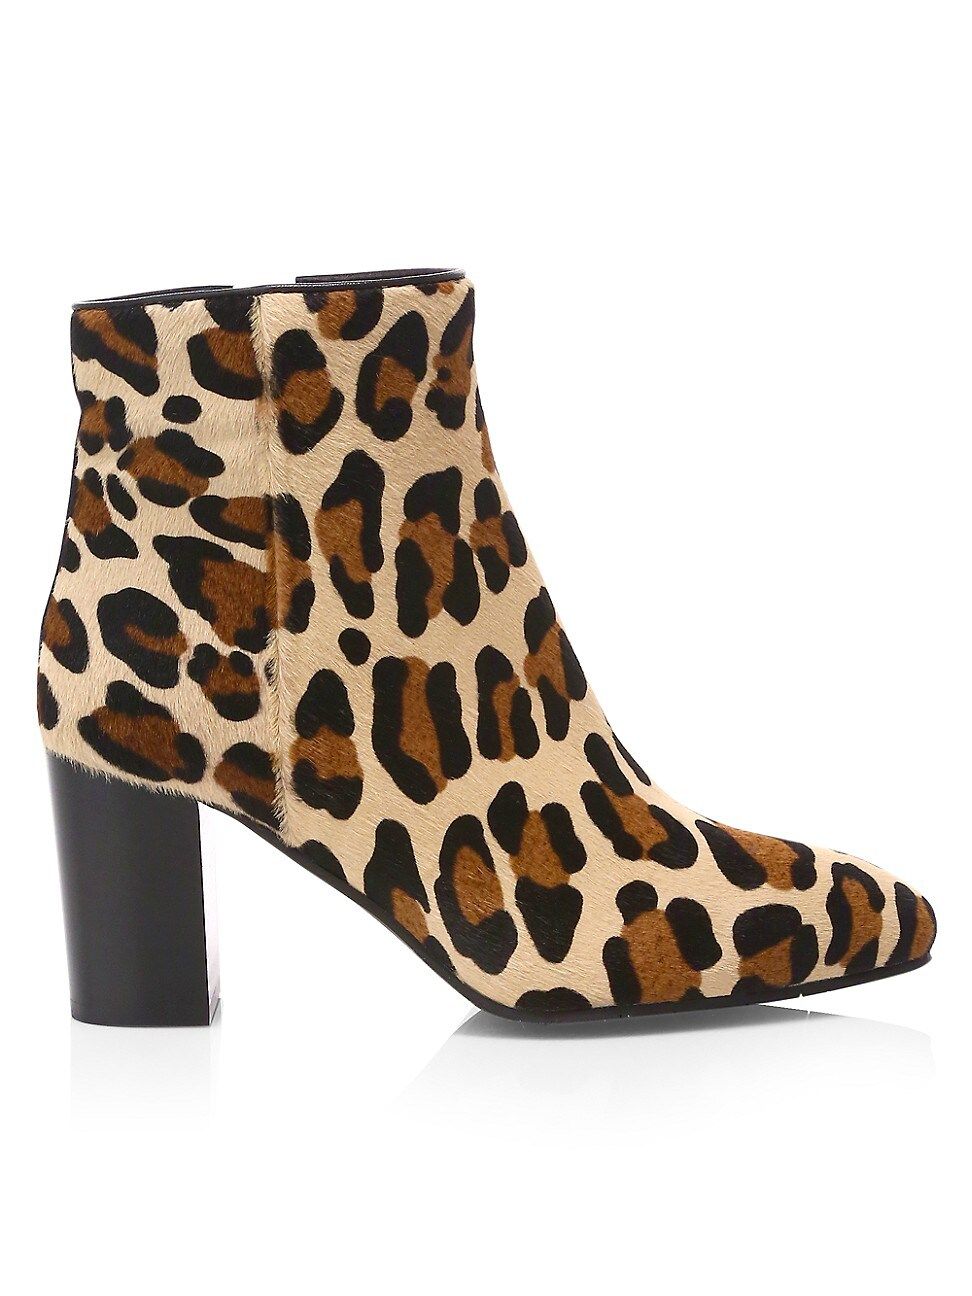 Aquatalia Women's Florita Leopard-Print Calf Hair Ankle Boots - Leopard - Size 6 | Saks Fifth Avenue